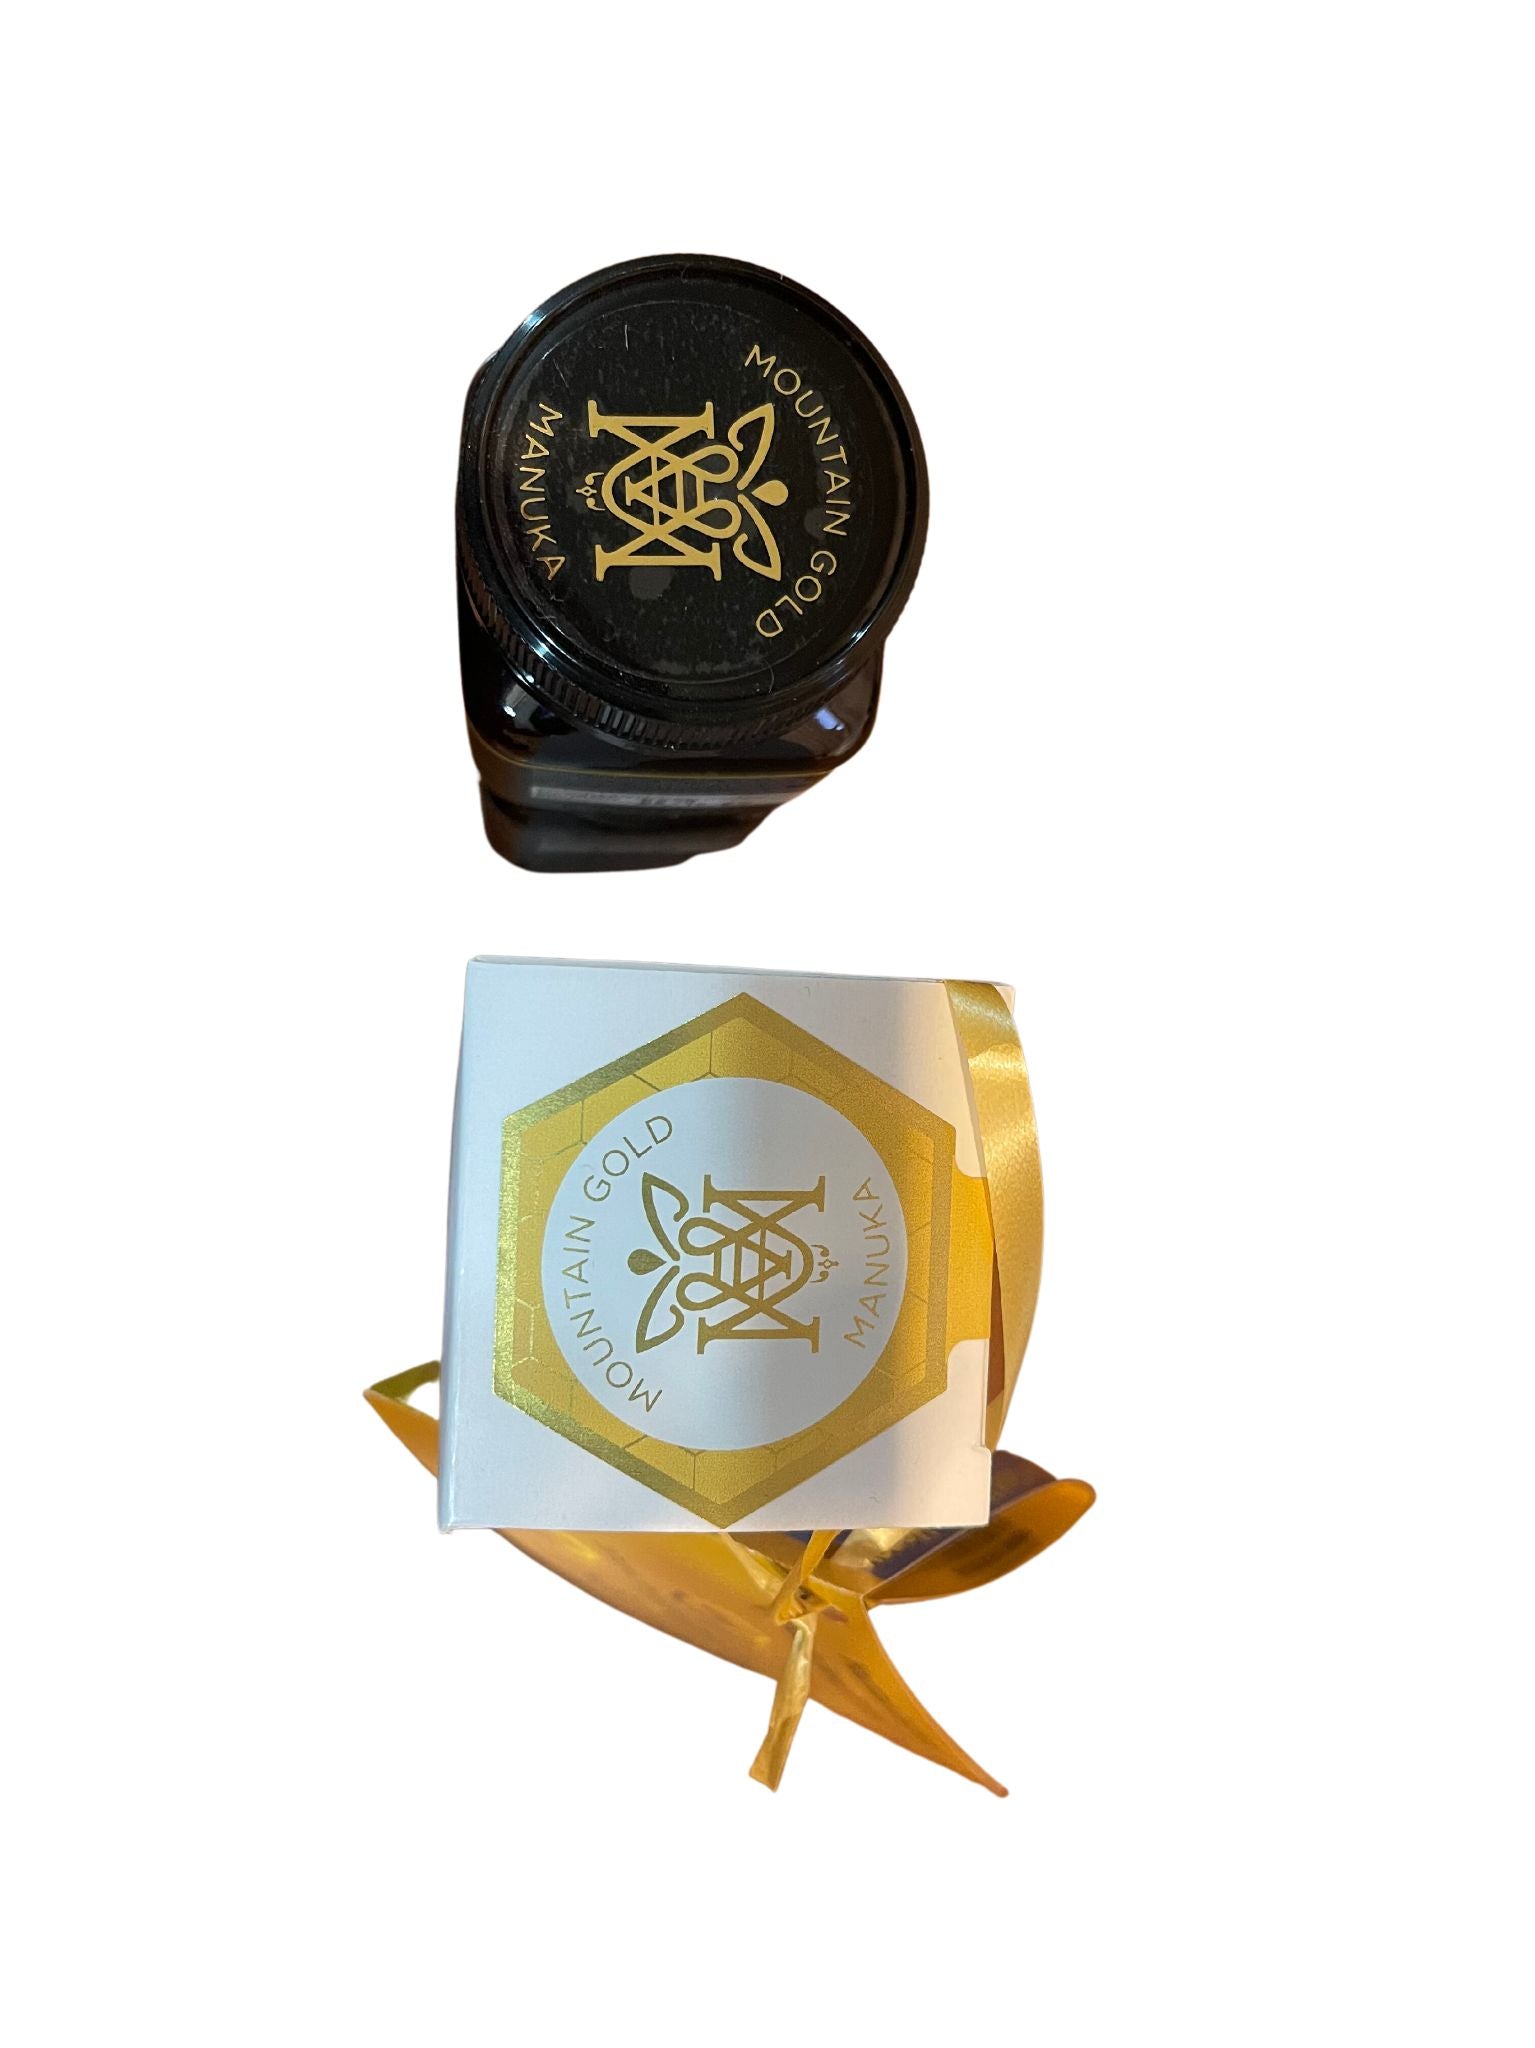 Mountain Gold UMF 5+ Manuka, Kanuka, and Beech Honeydew Honey Gift Pack